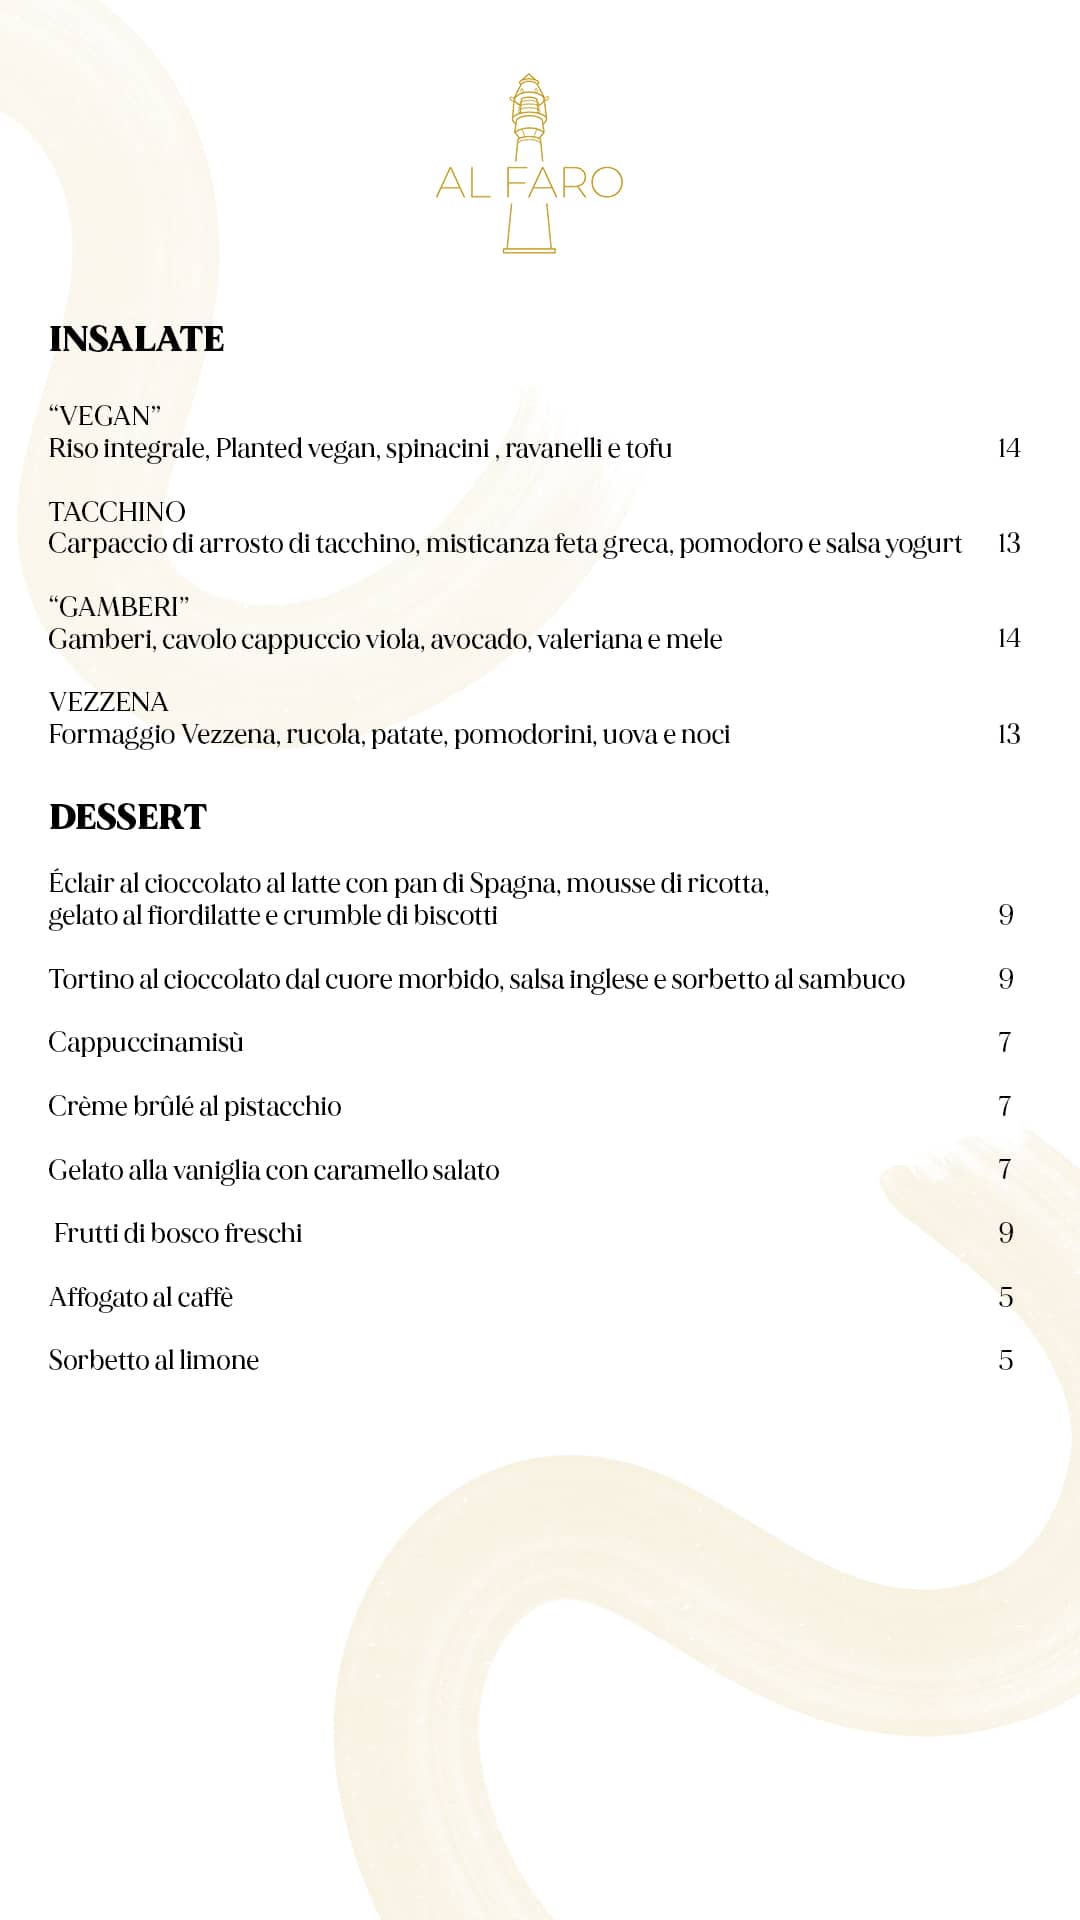 AlFaro menu mobile 2024 - Insalate, Dessert